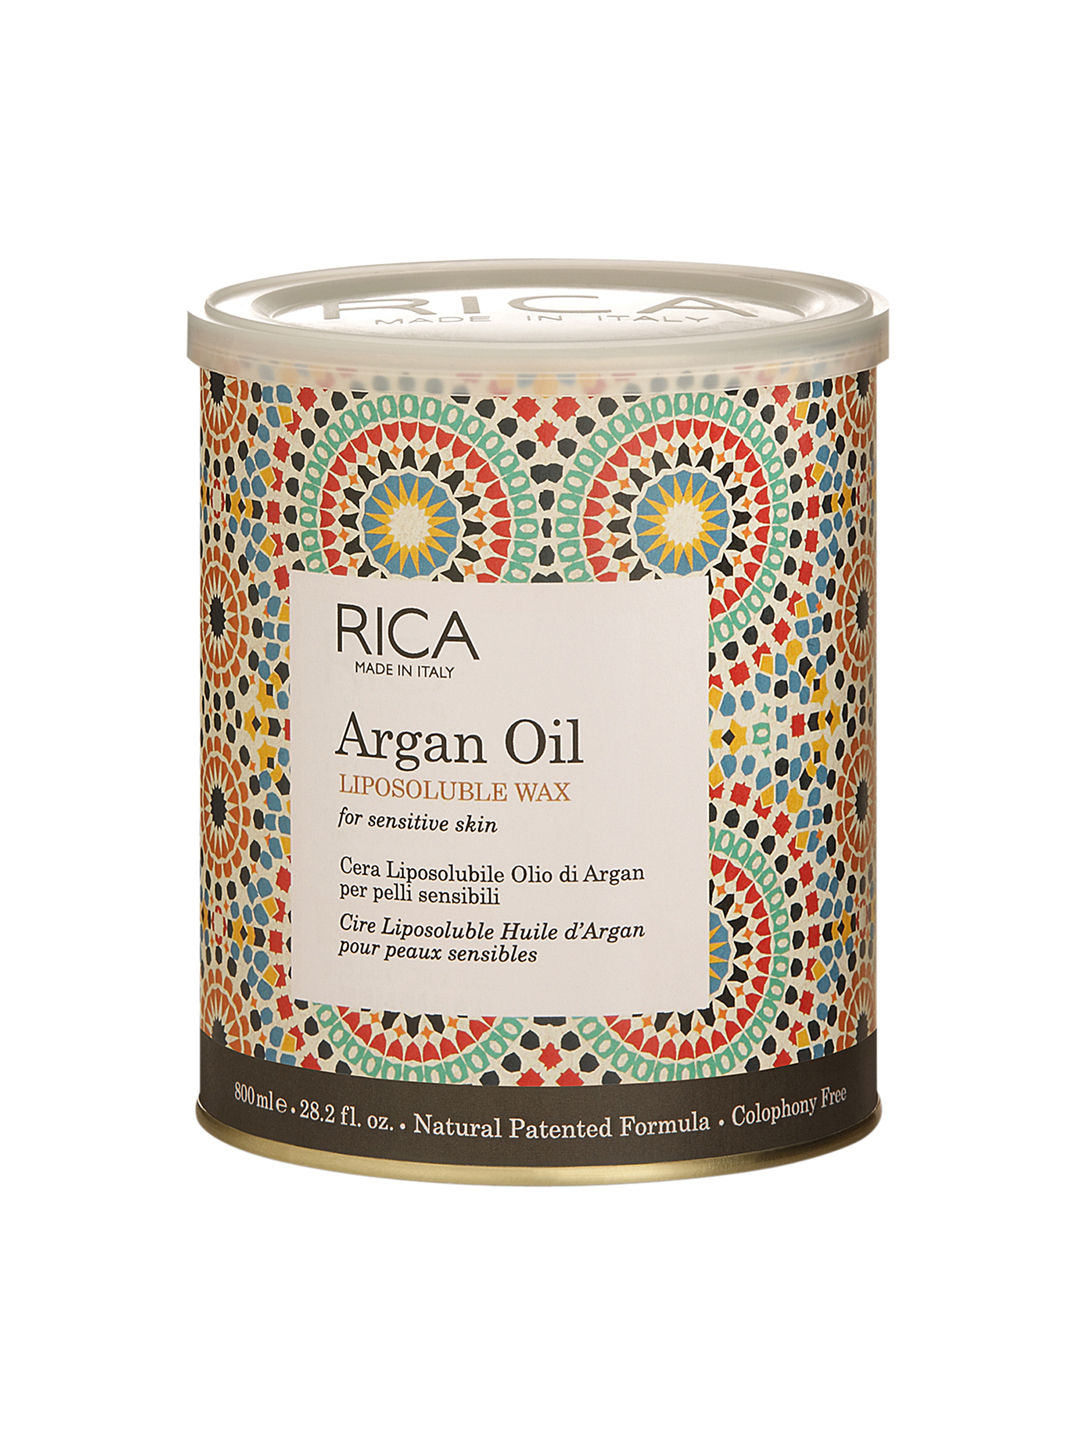 Rica Liposoluble Wax With Argan Oil